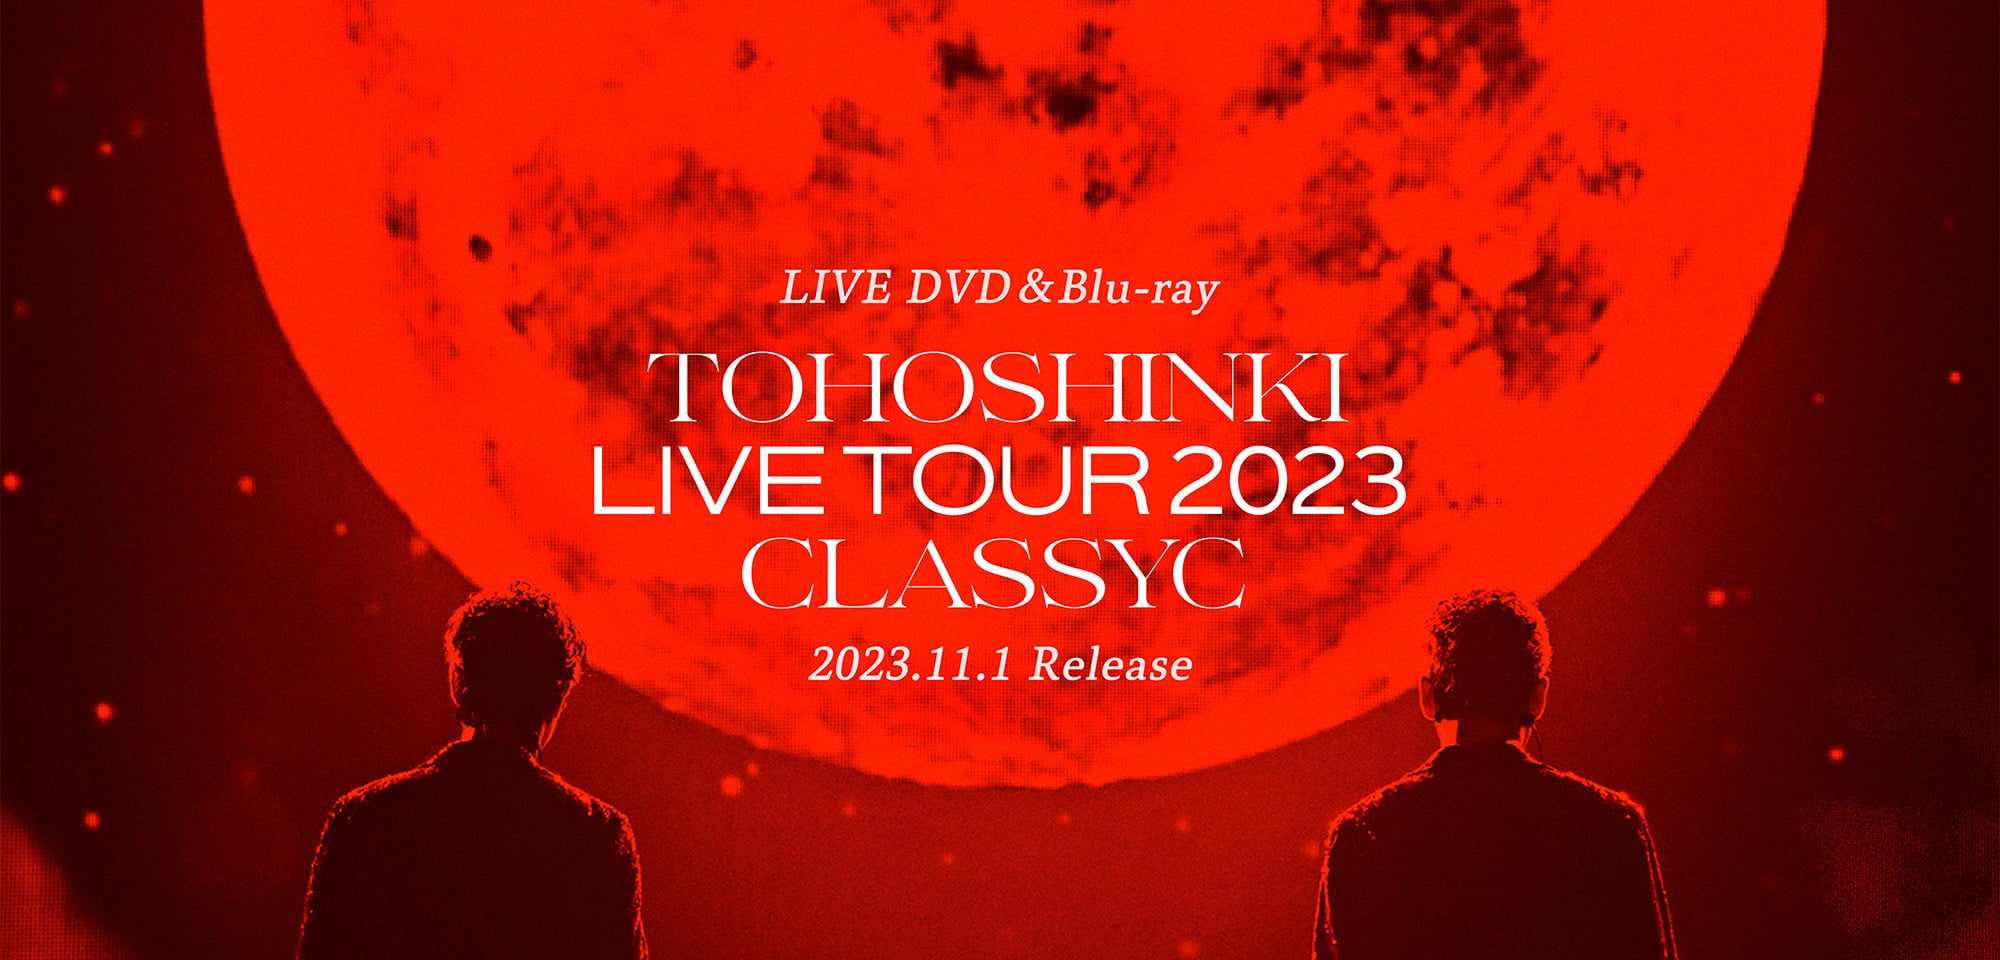 LIVE DVD & Blu-ray 「TOHOSHINKI LIVE TOUR 2023 CLASSYC」2023.11.1 Release